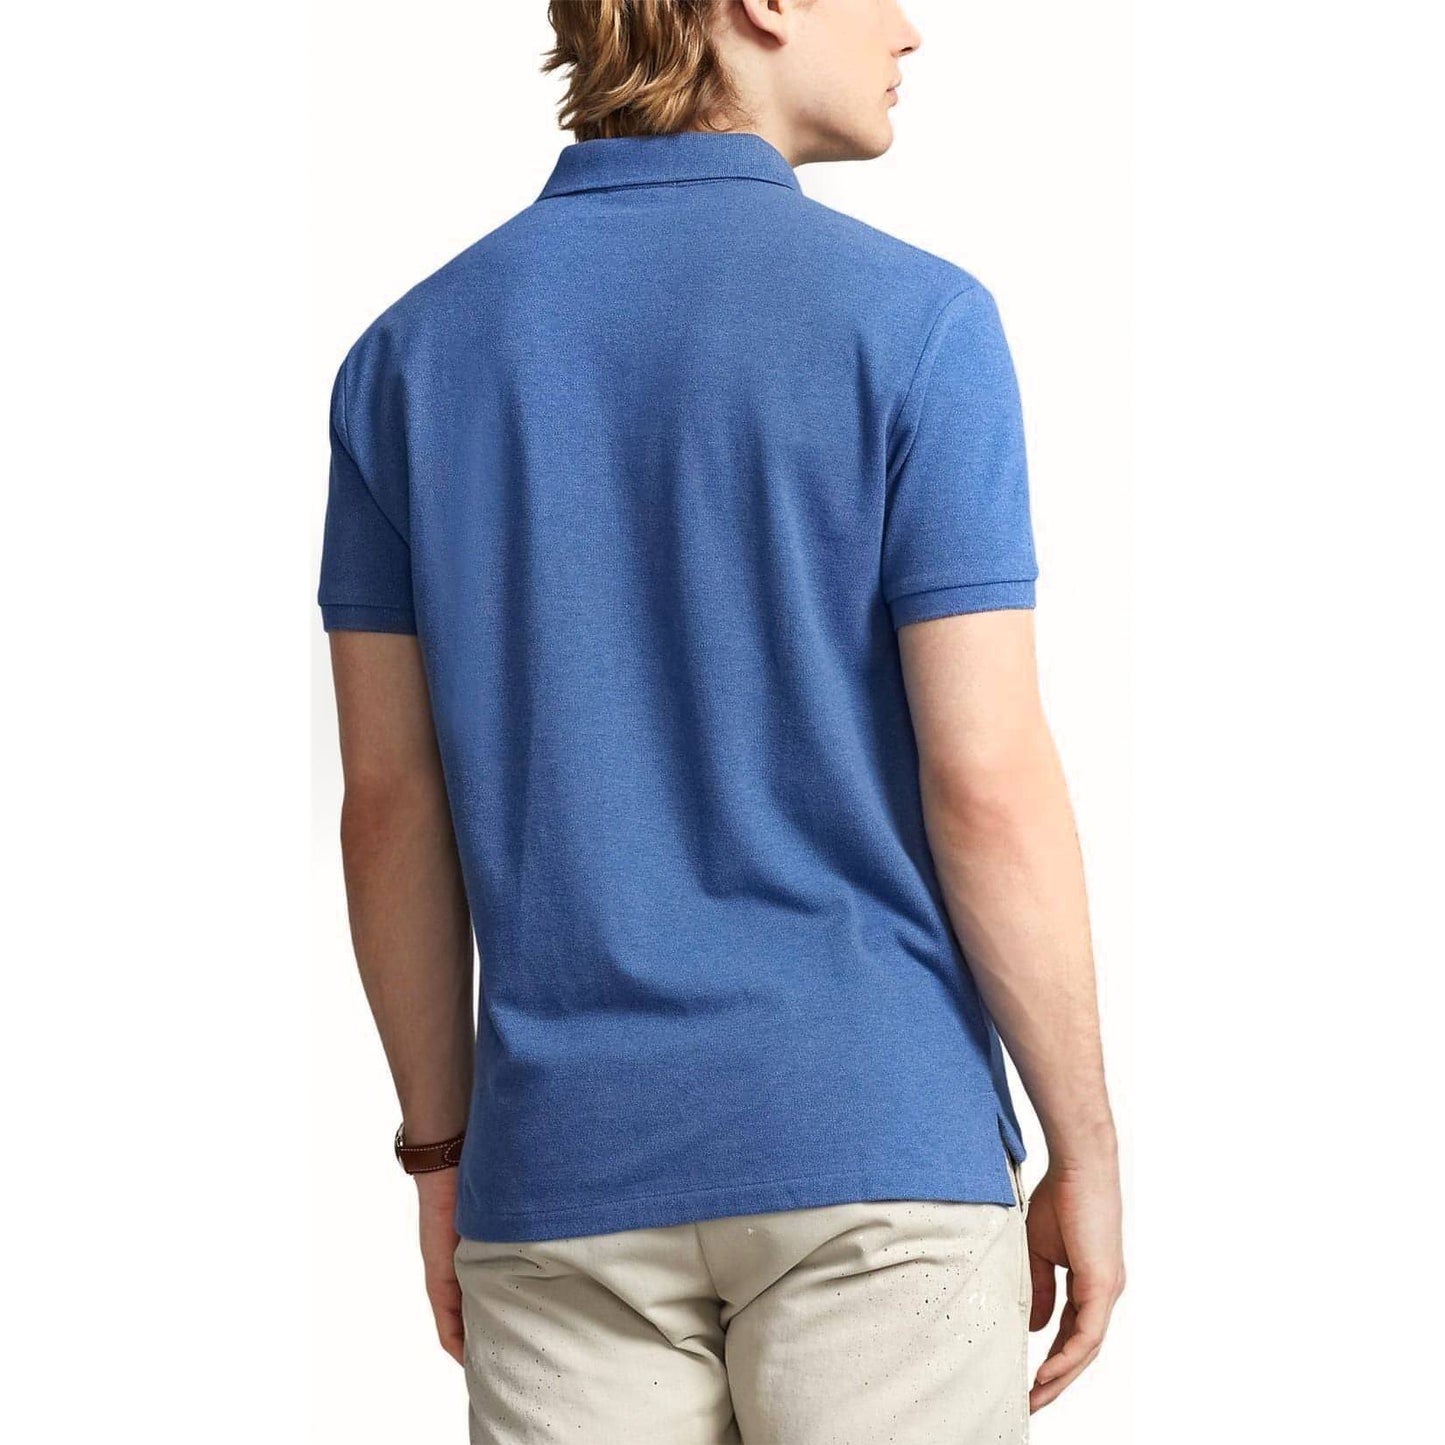 POLO RALPH LAUREN vyriški mėlyni Polo marškinėliai trumpomis rankovėmis Short sleeve polo shirt